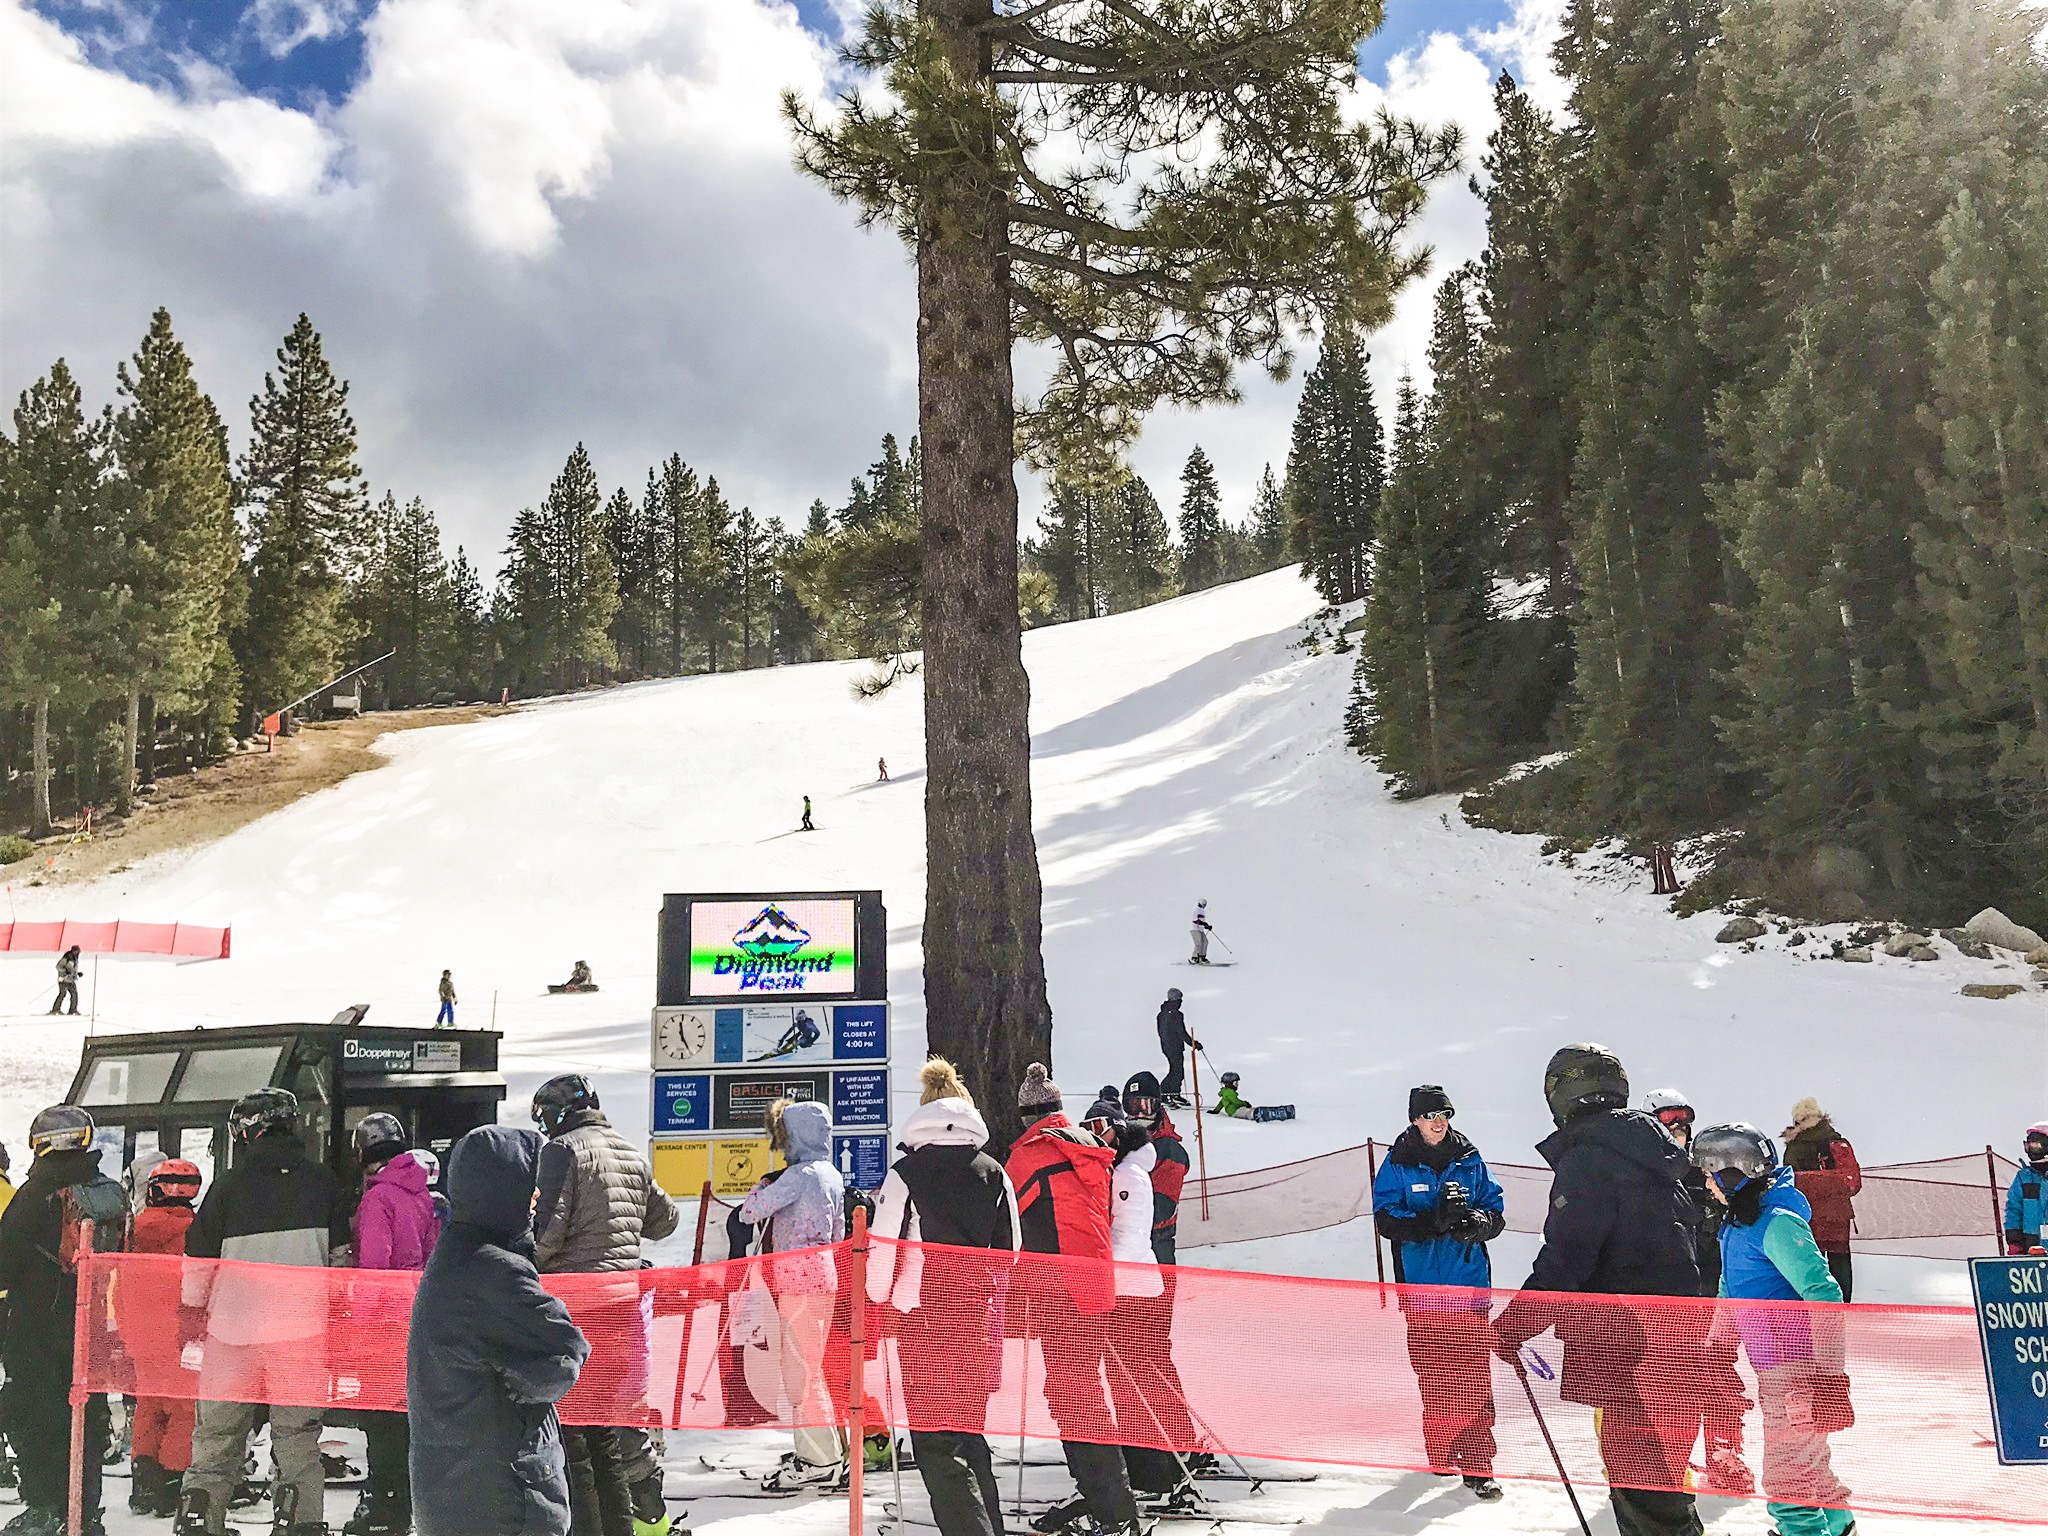 Review of Diamond Peak Ski Resort for Families with Kids | Tahoe with Kids | Family Friendly Ski Resorts | Henry and Andrew’s Guide (www.henryandandrewsguide.com)